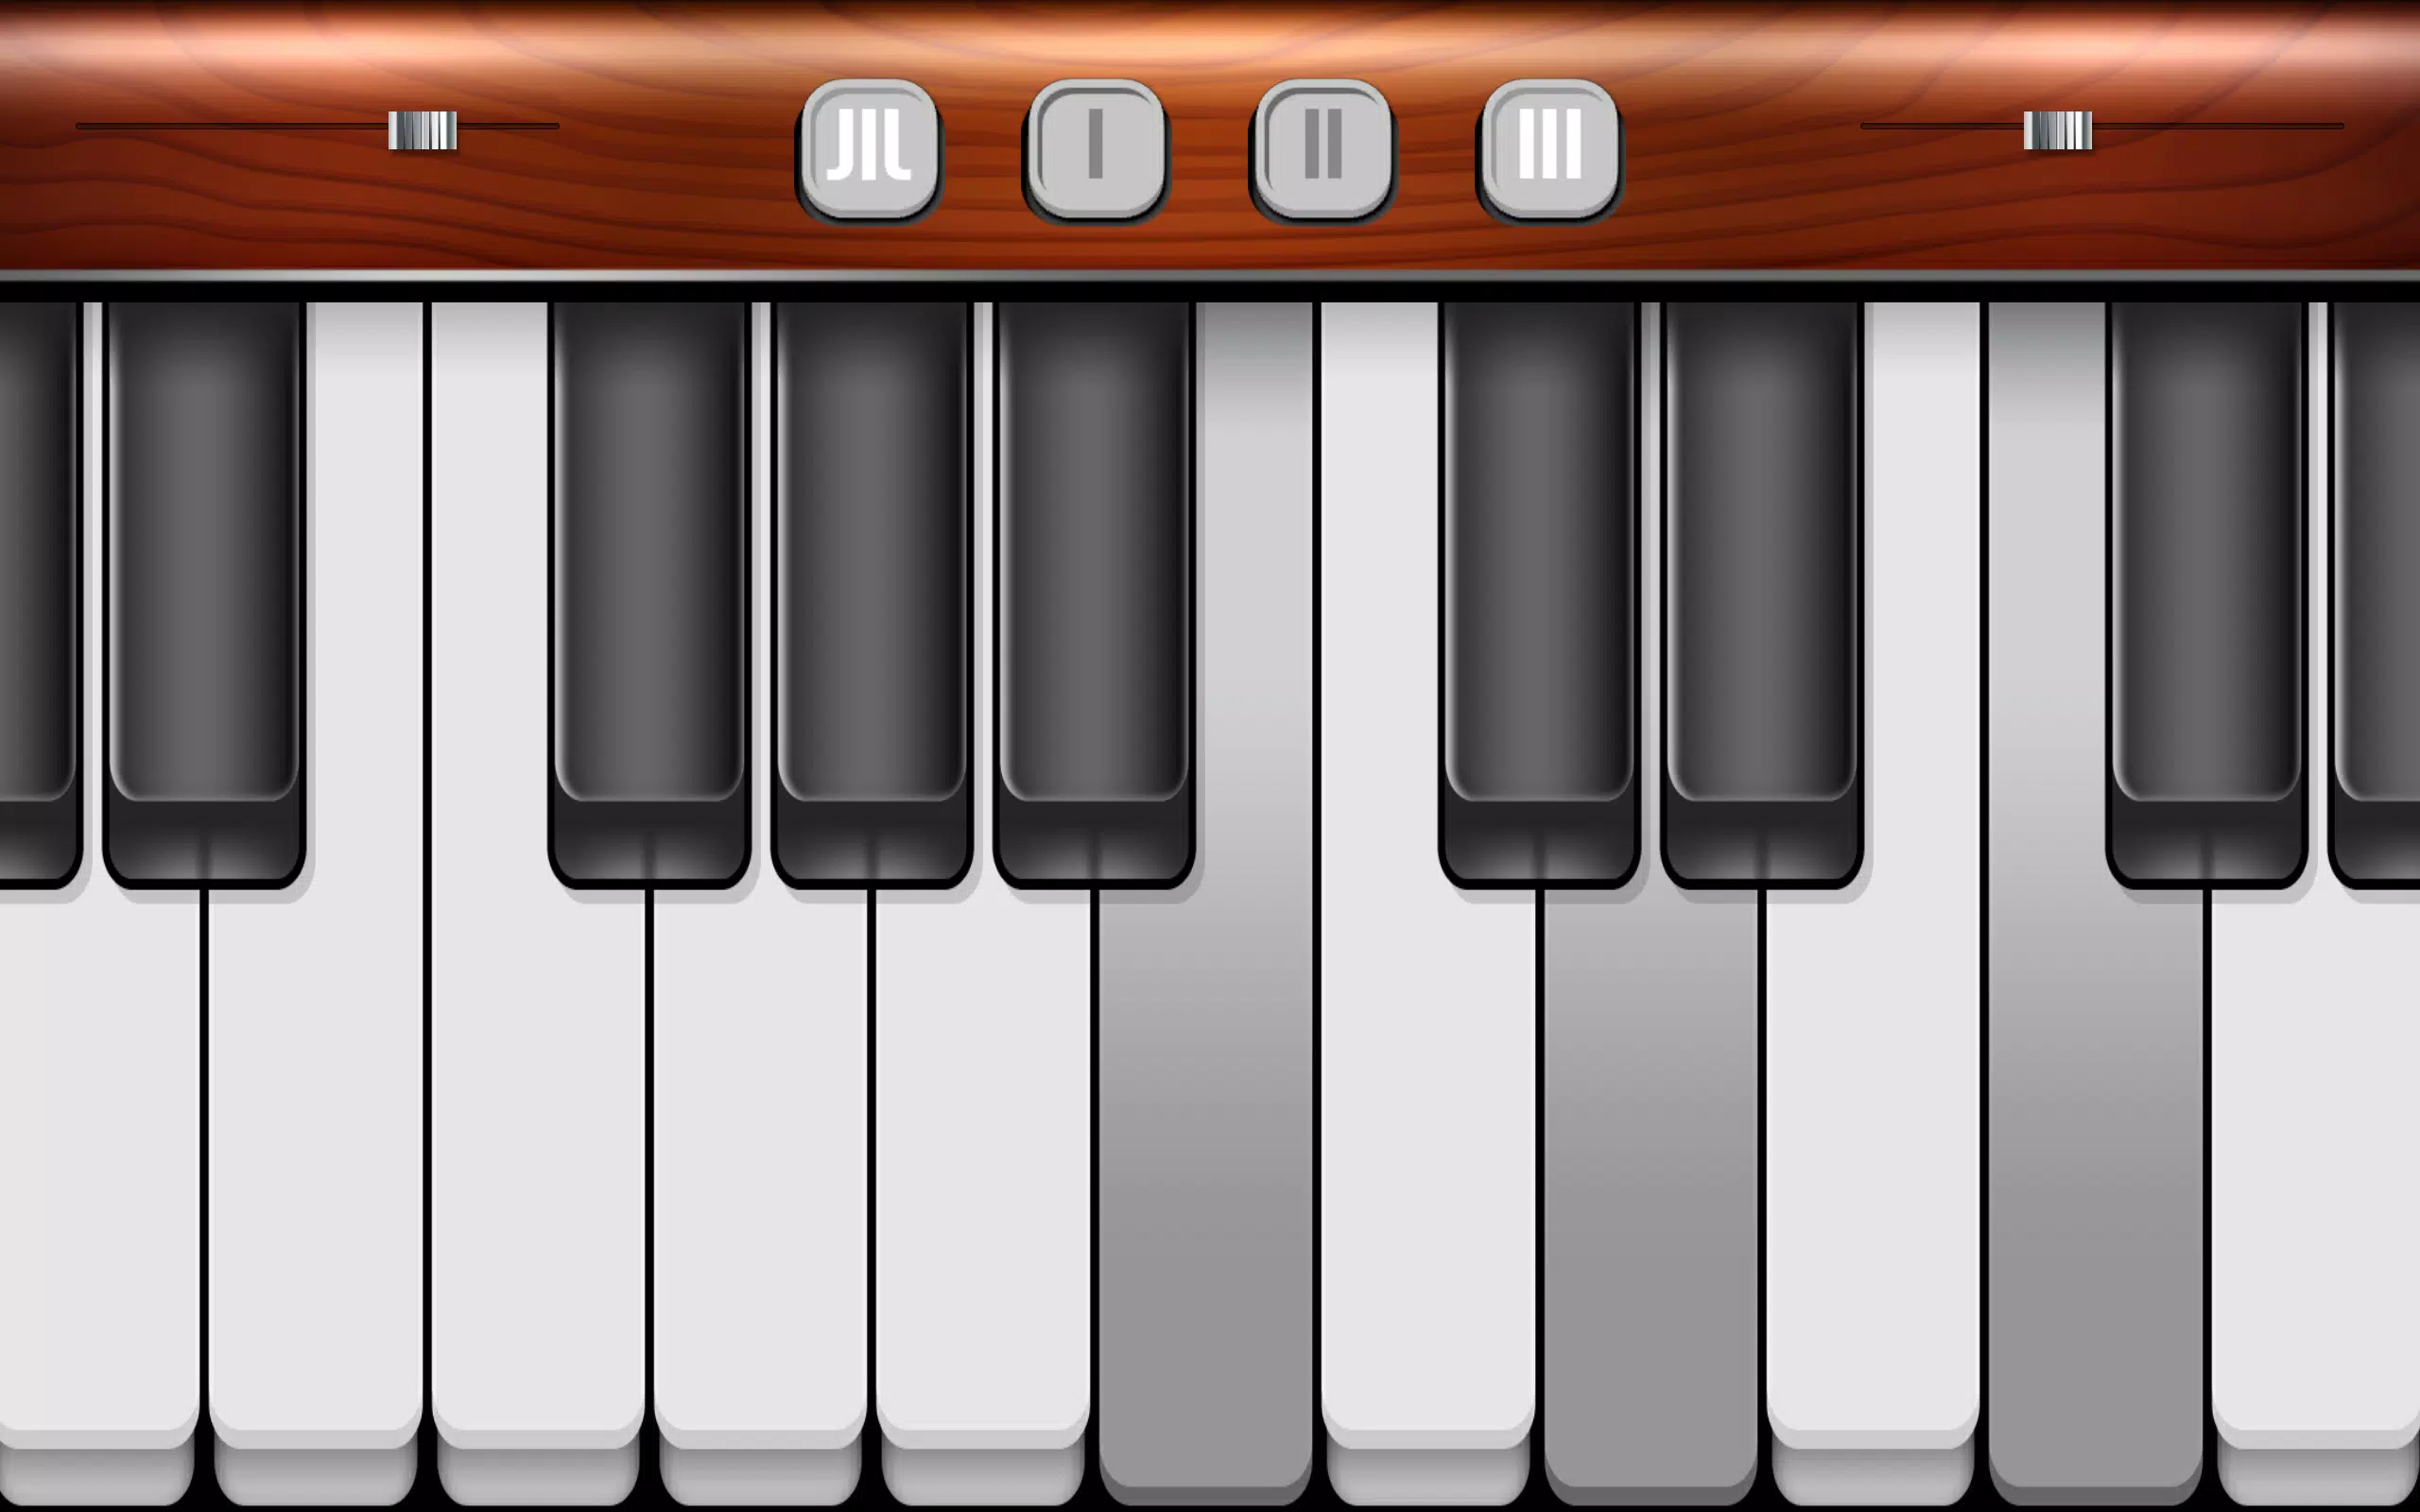 MagicScore Virtual Piano – Online Piano Keyboard